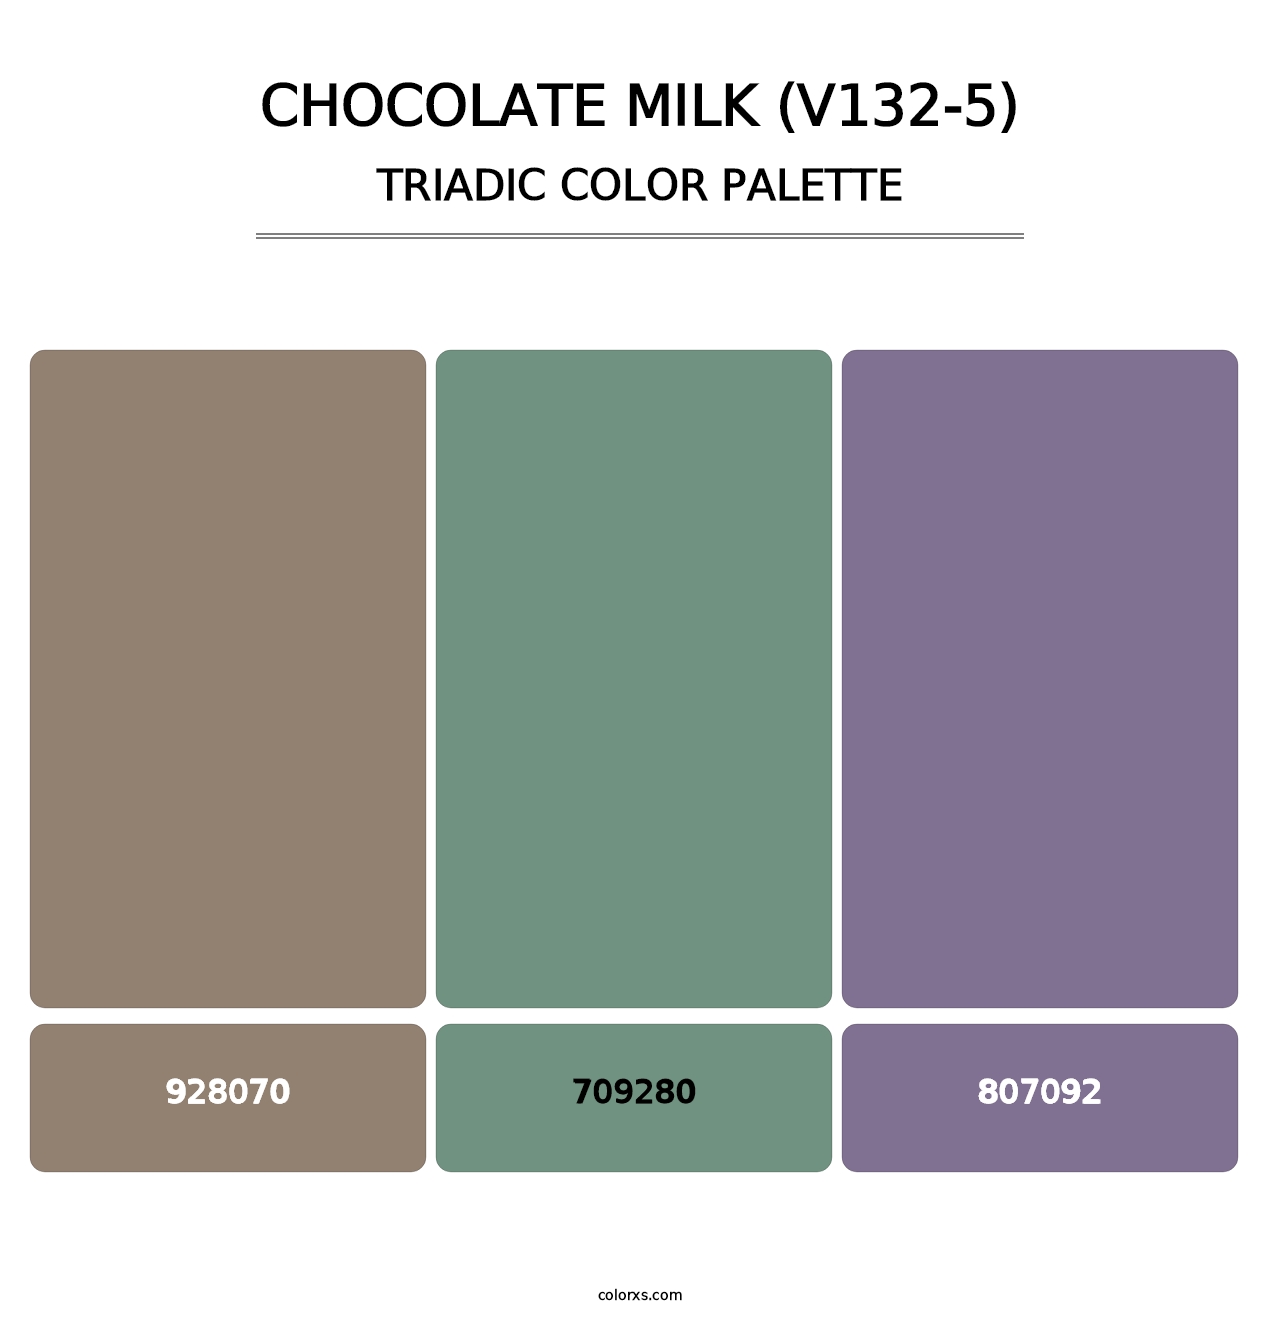 Chocolate Milk (V132-5) - Triadic Color Palette